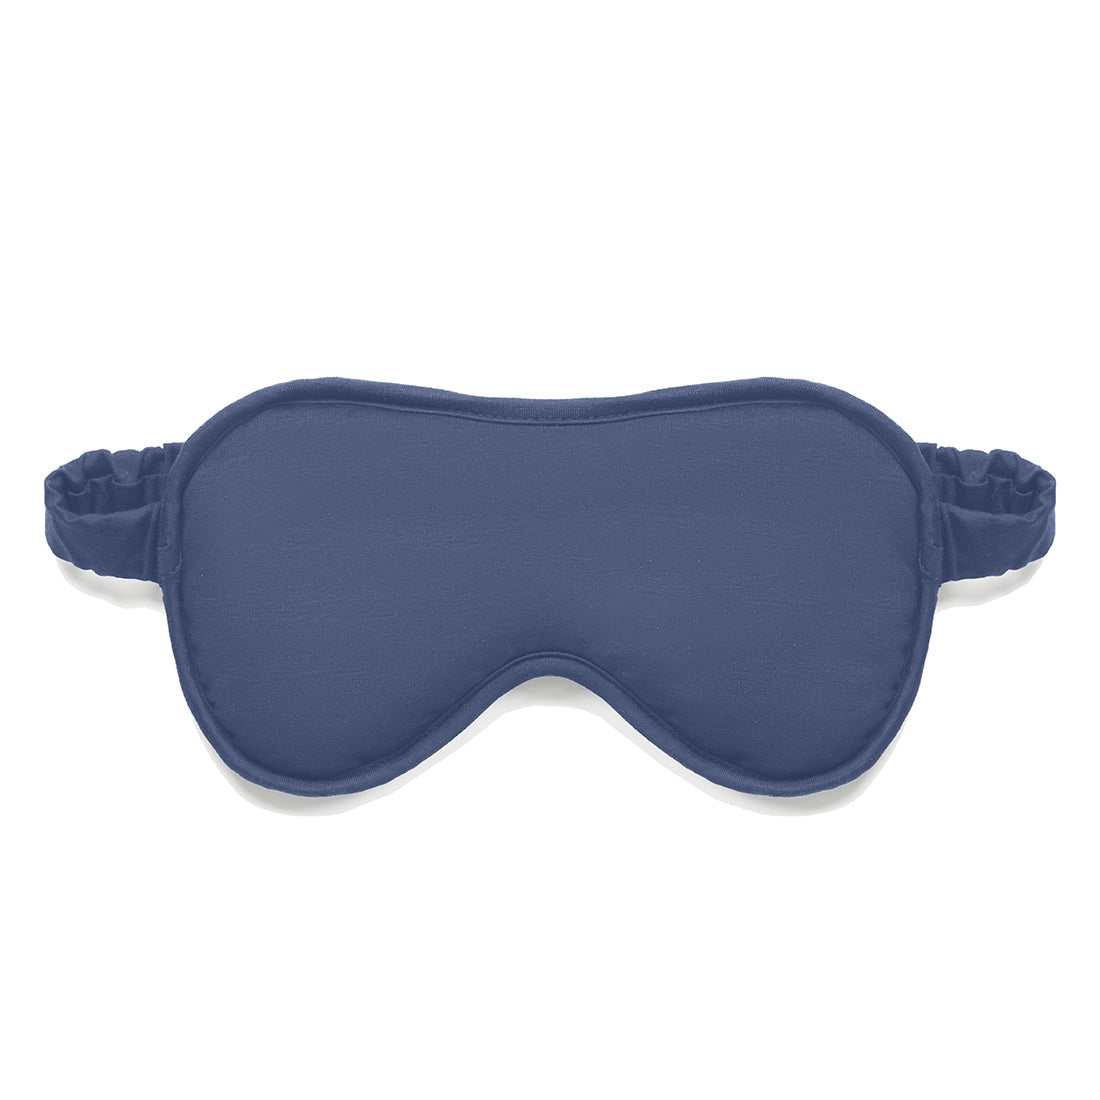 Breathable cooling sleep mask